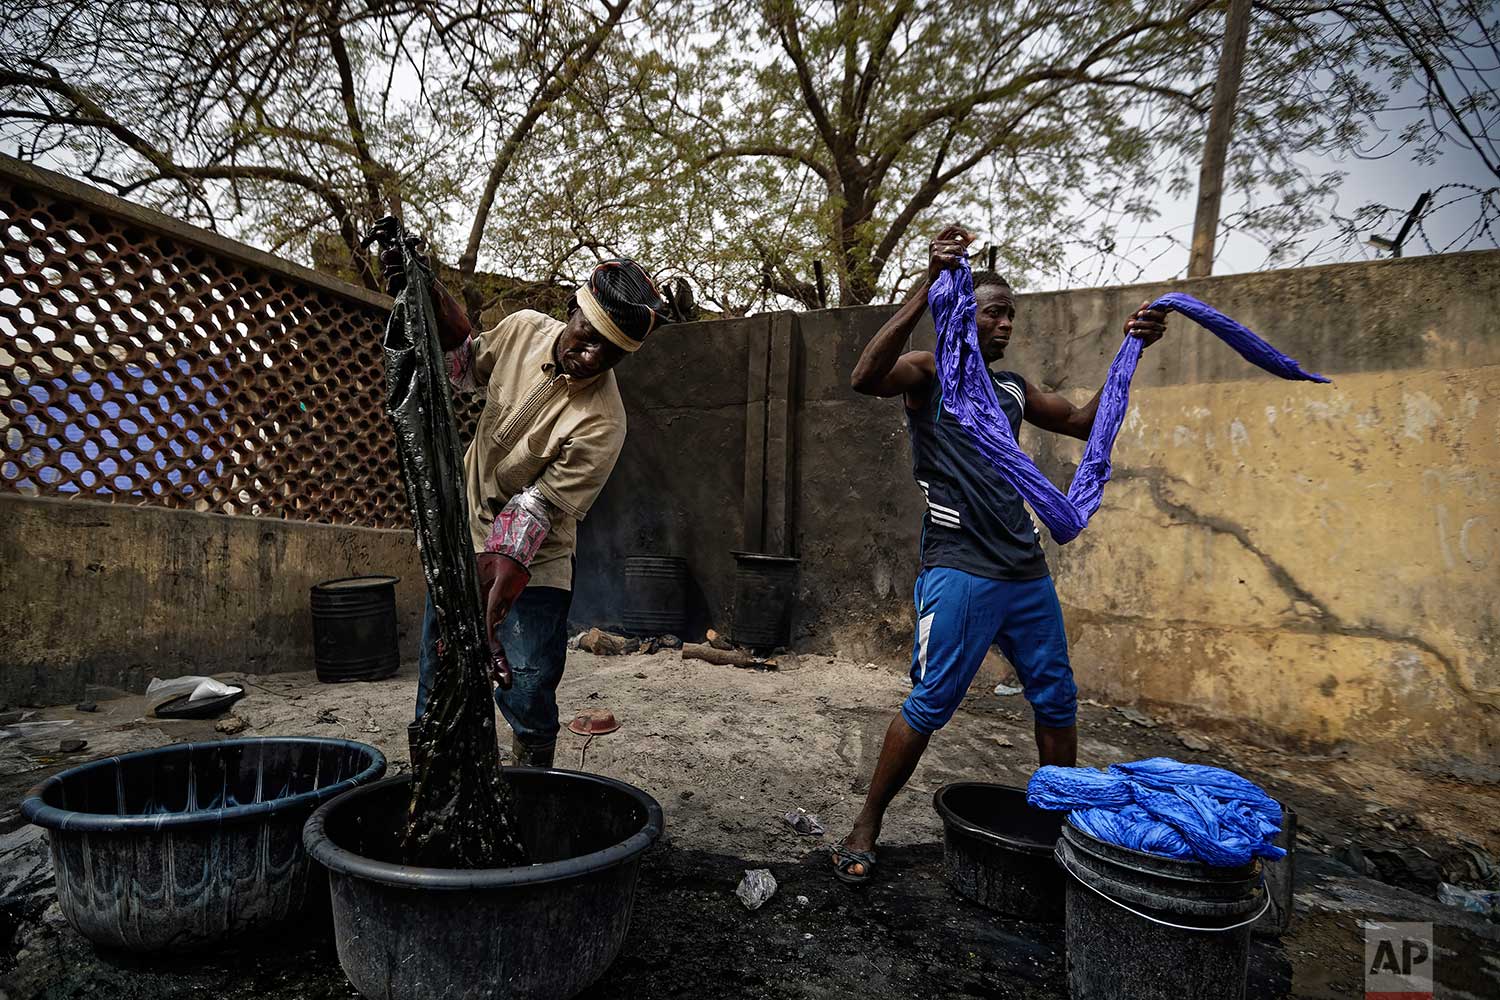  In this photo taken Tuesday, Feb. 19, 2019, craftsmen dye cloths in buckets next to the ancient dye pits of Kofar Mata in Kano, northern Nigeria. (AP Photo/Ben Curtis) 